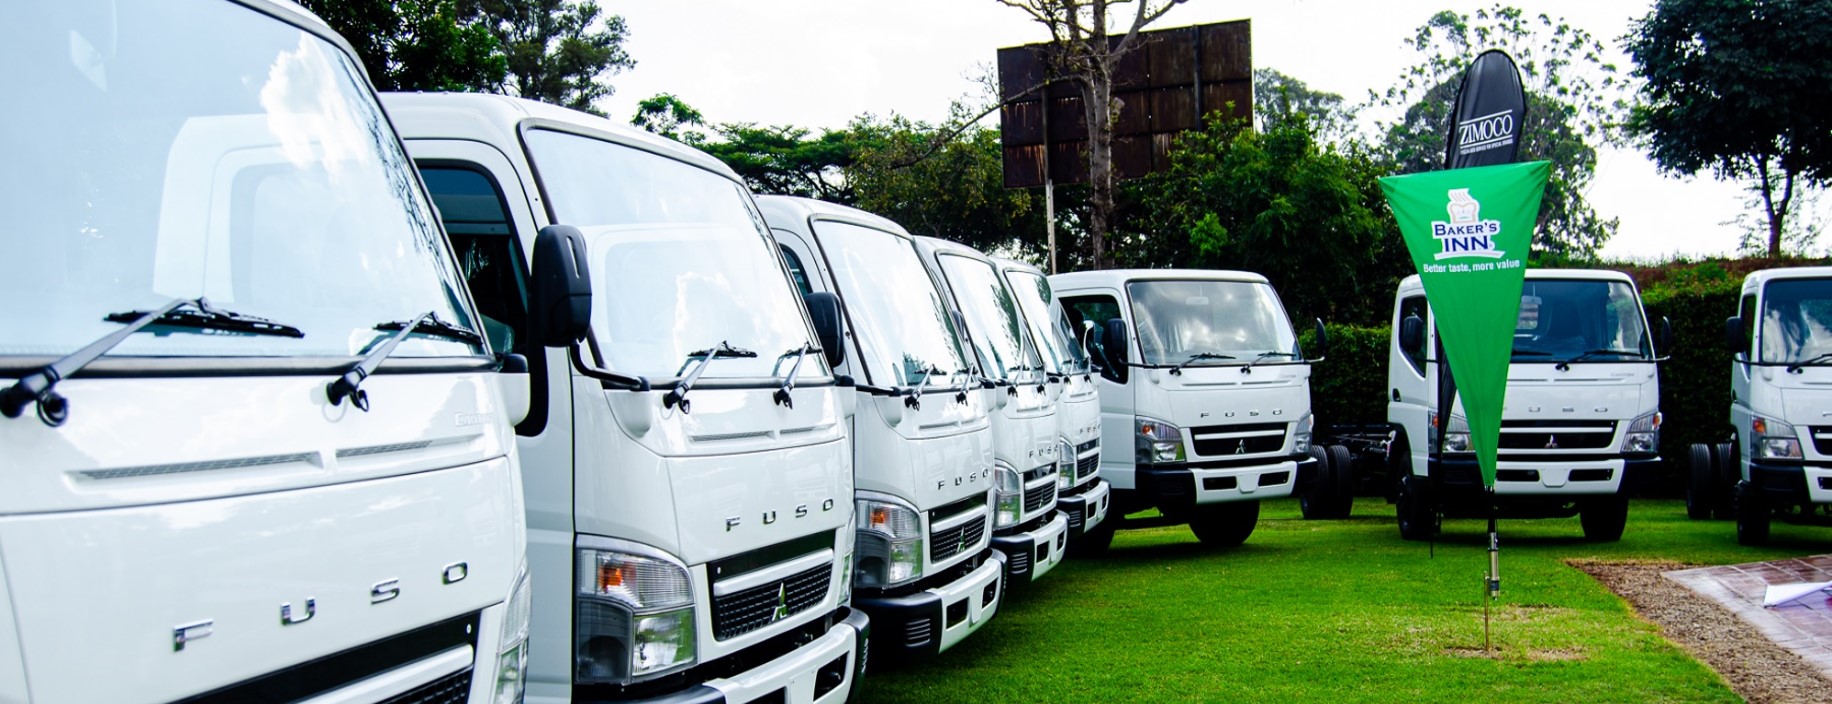 fuso-achieves-fleet-deal-of-250-trucks-in-zimbabwe